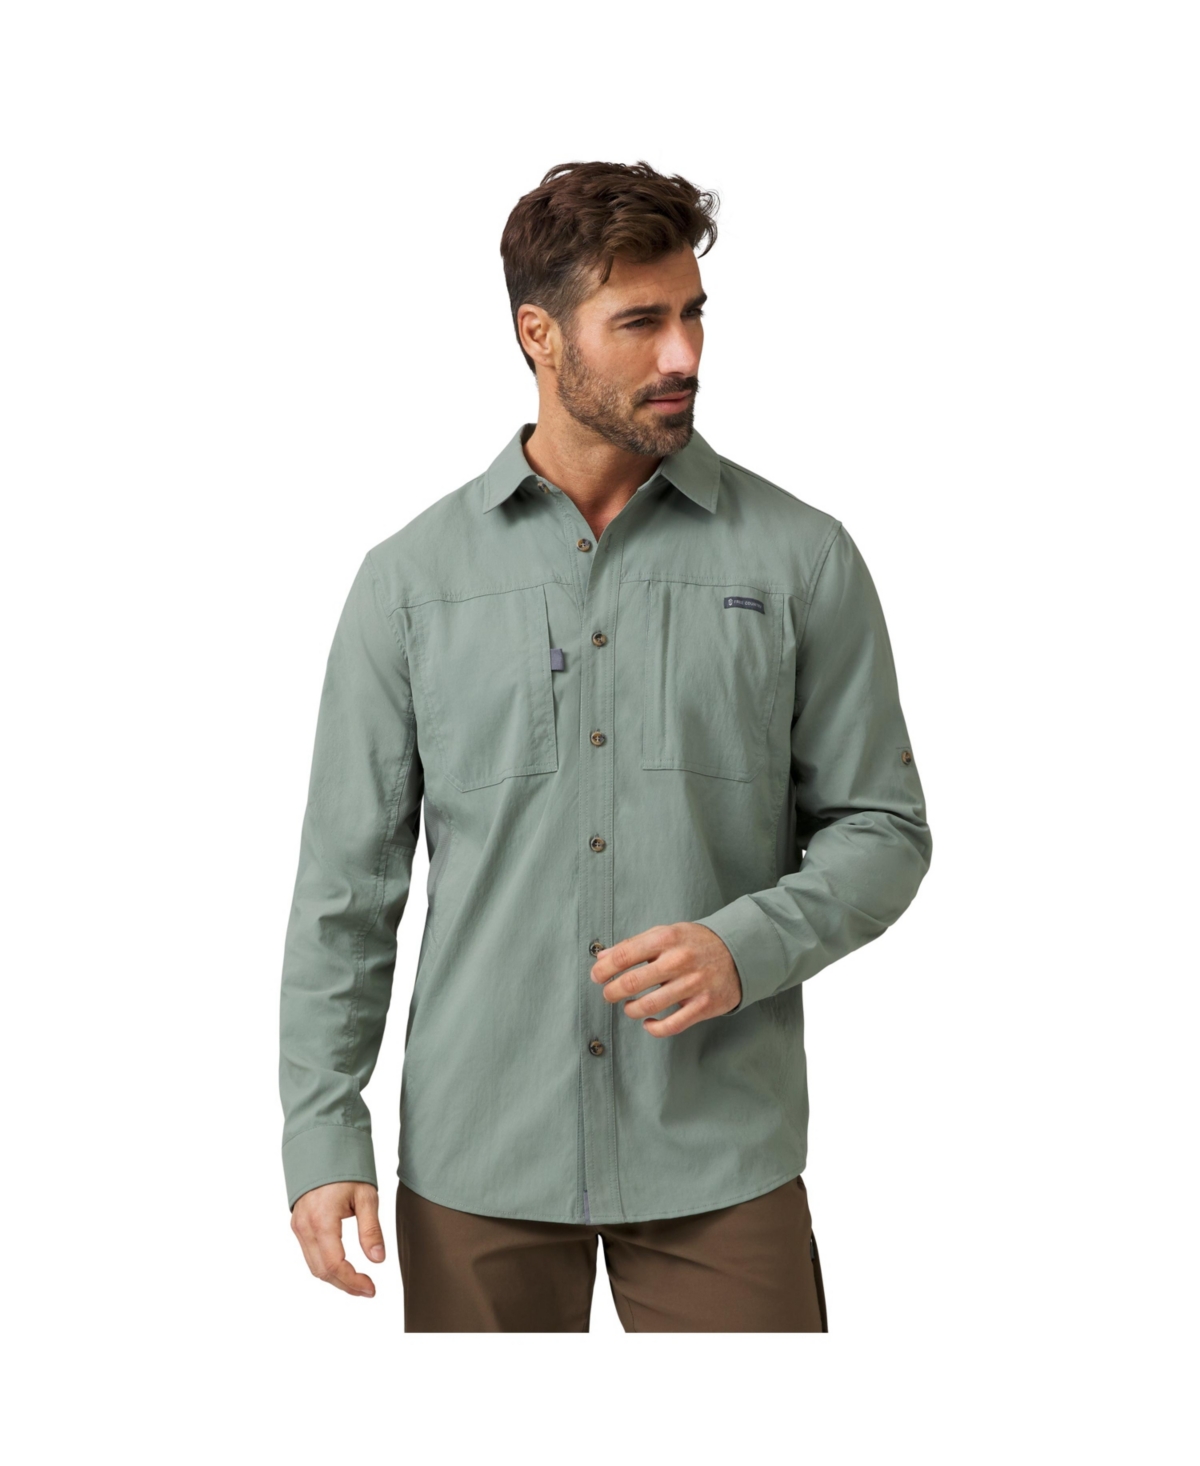 Men's Acadia Long Sleeve Shirt - Dark denim